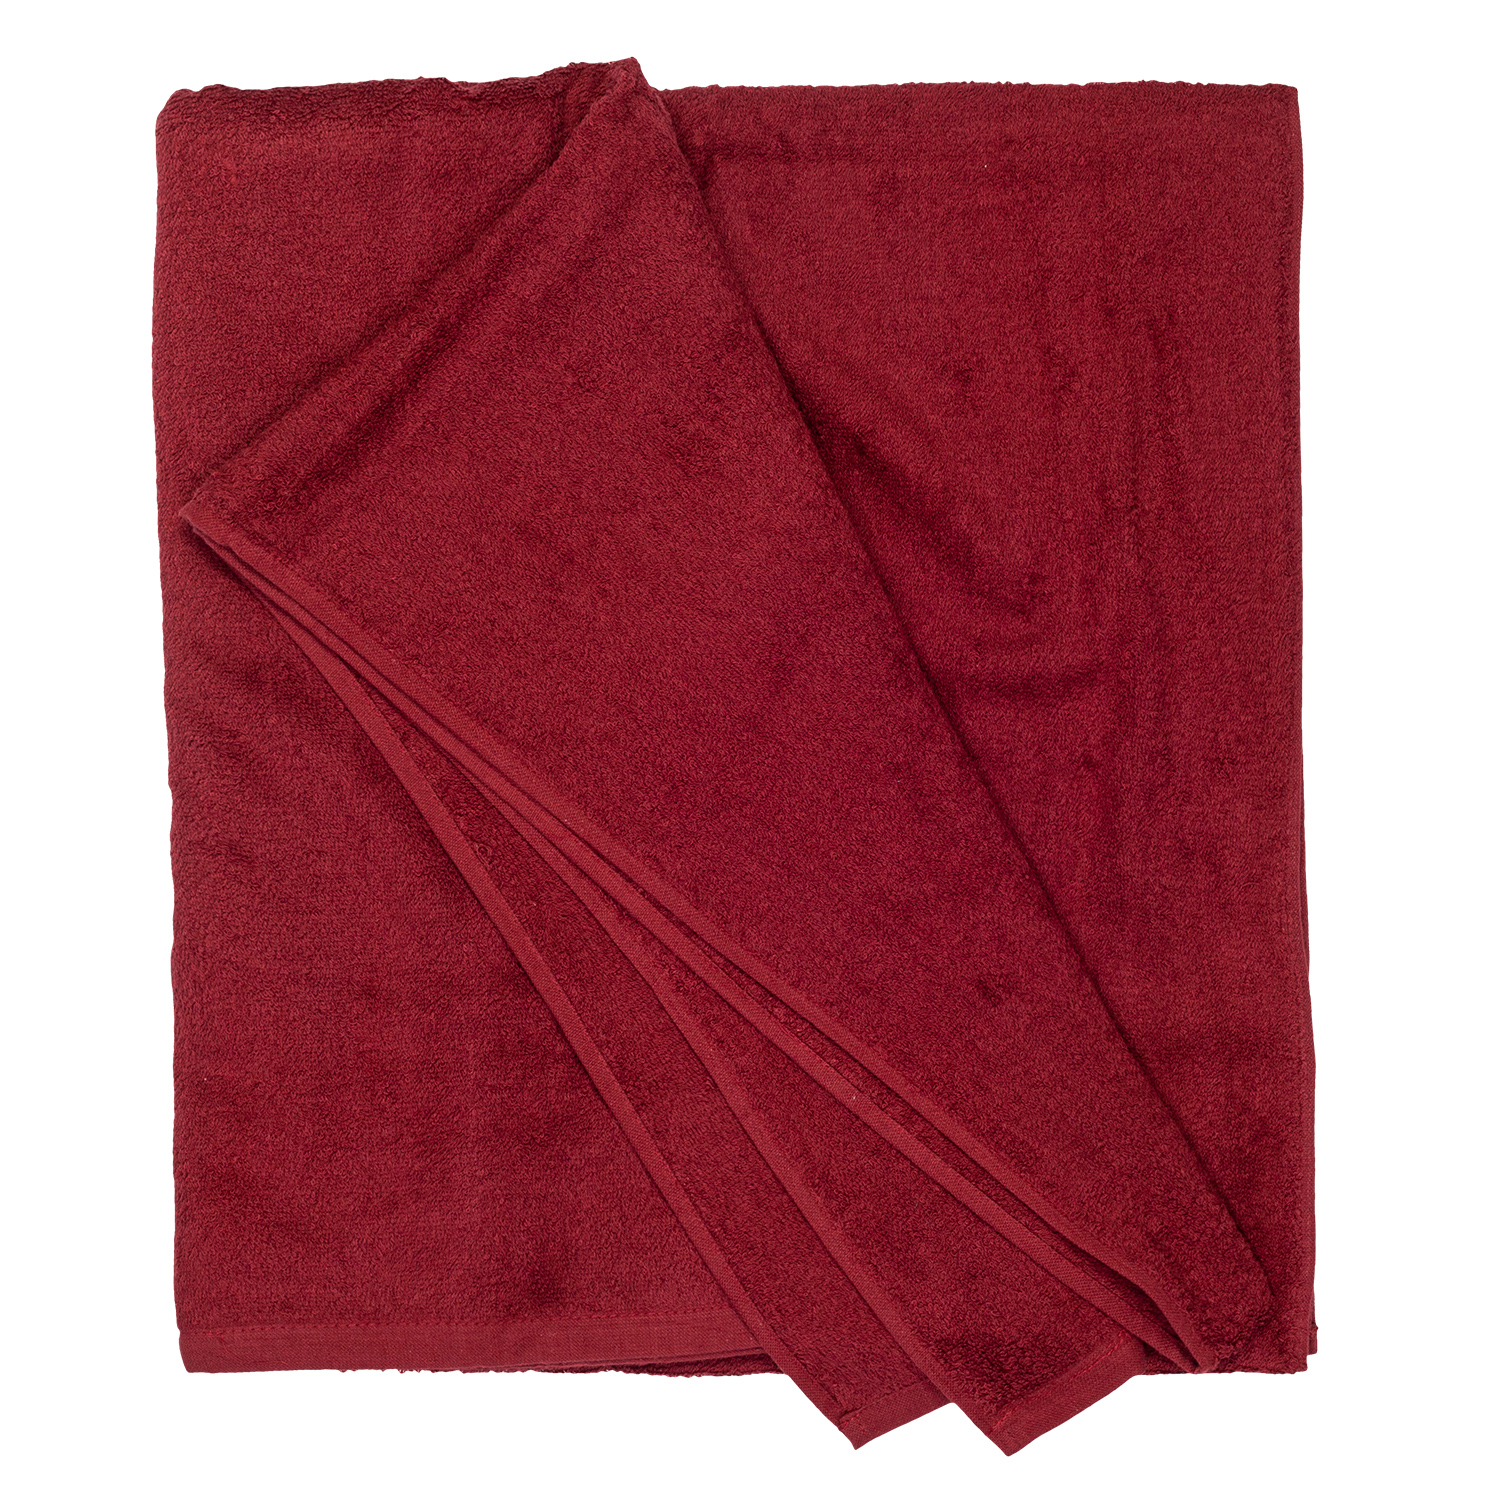 Bath towel series Helsinki in burgundy by Adamo in large sizes 100x220 cm or 155x220 cm